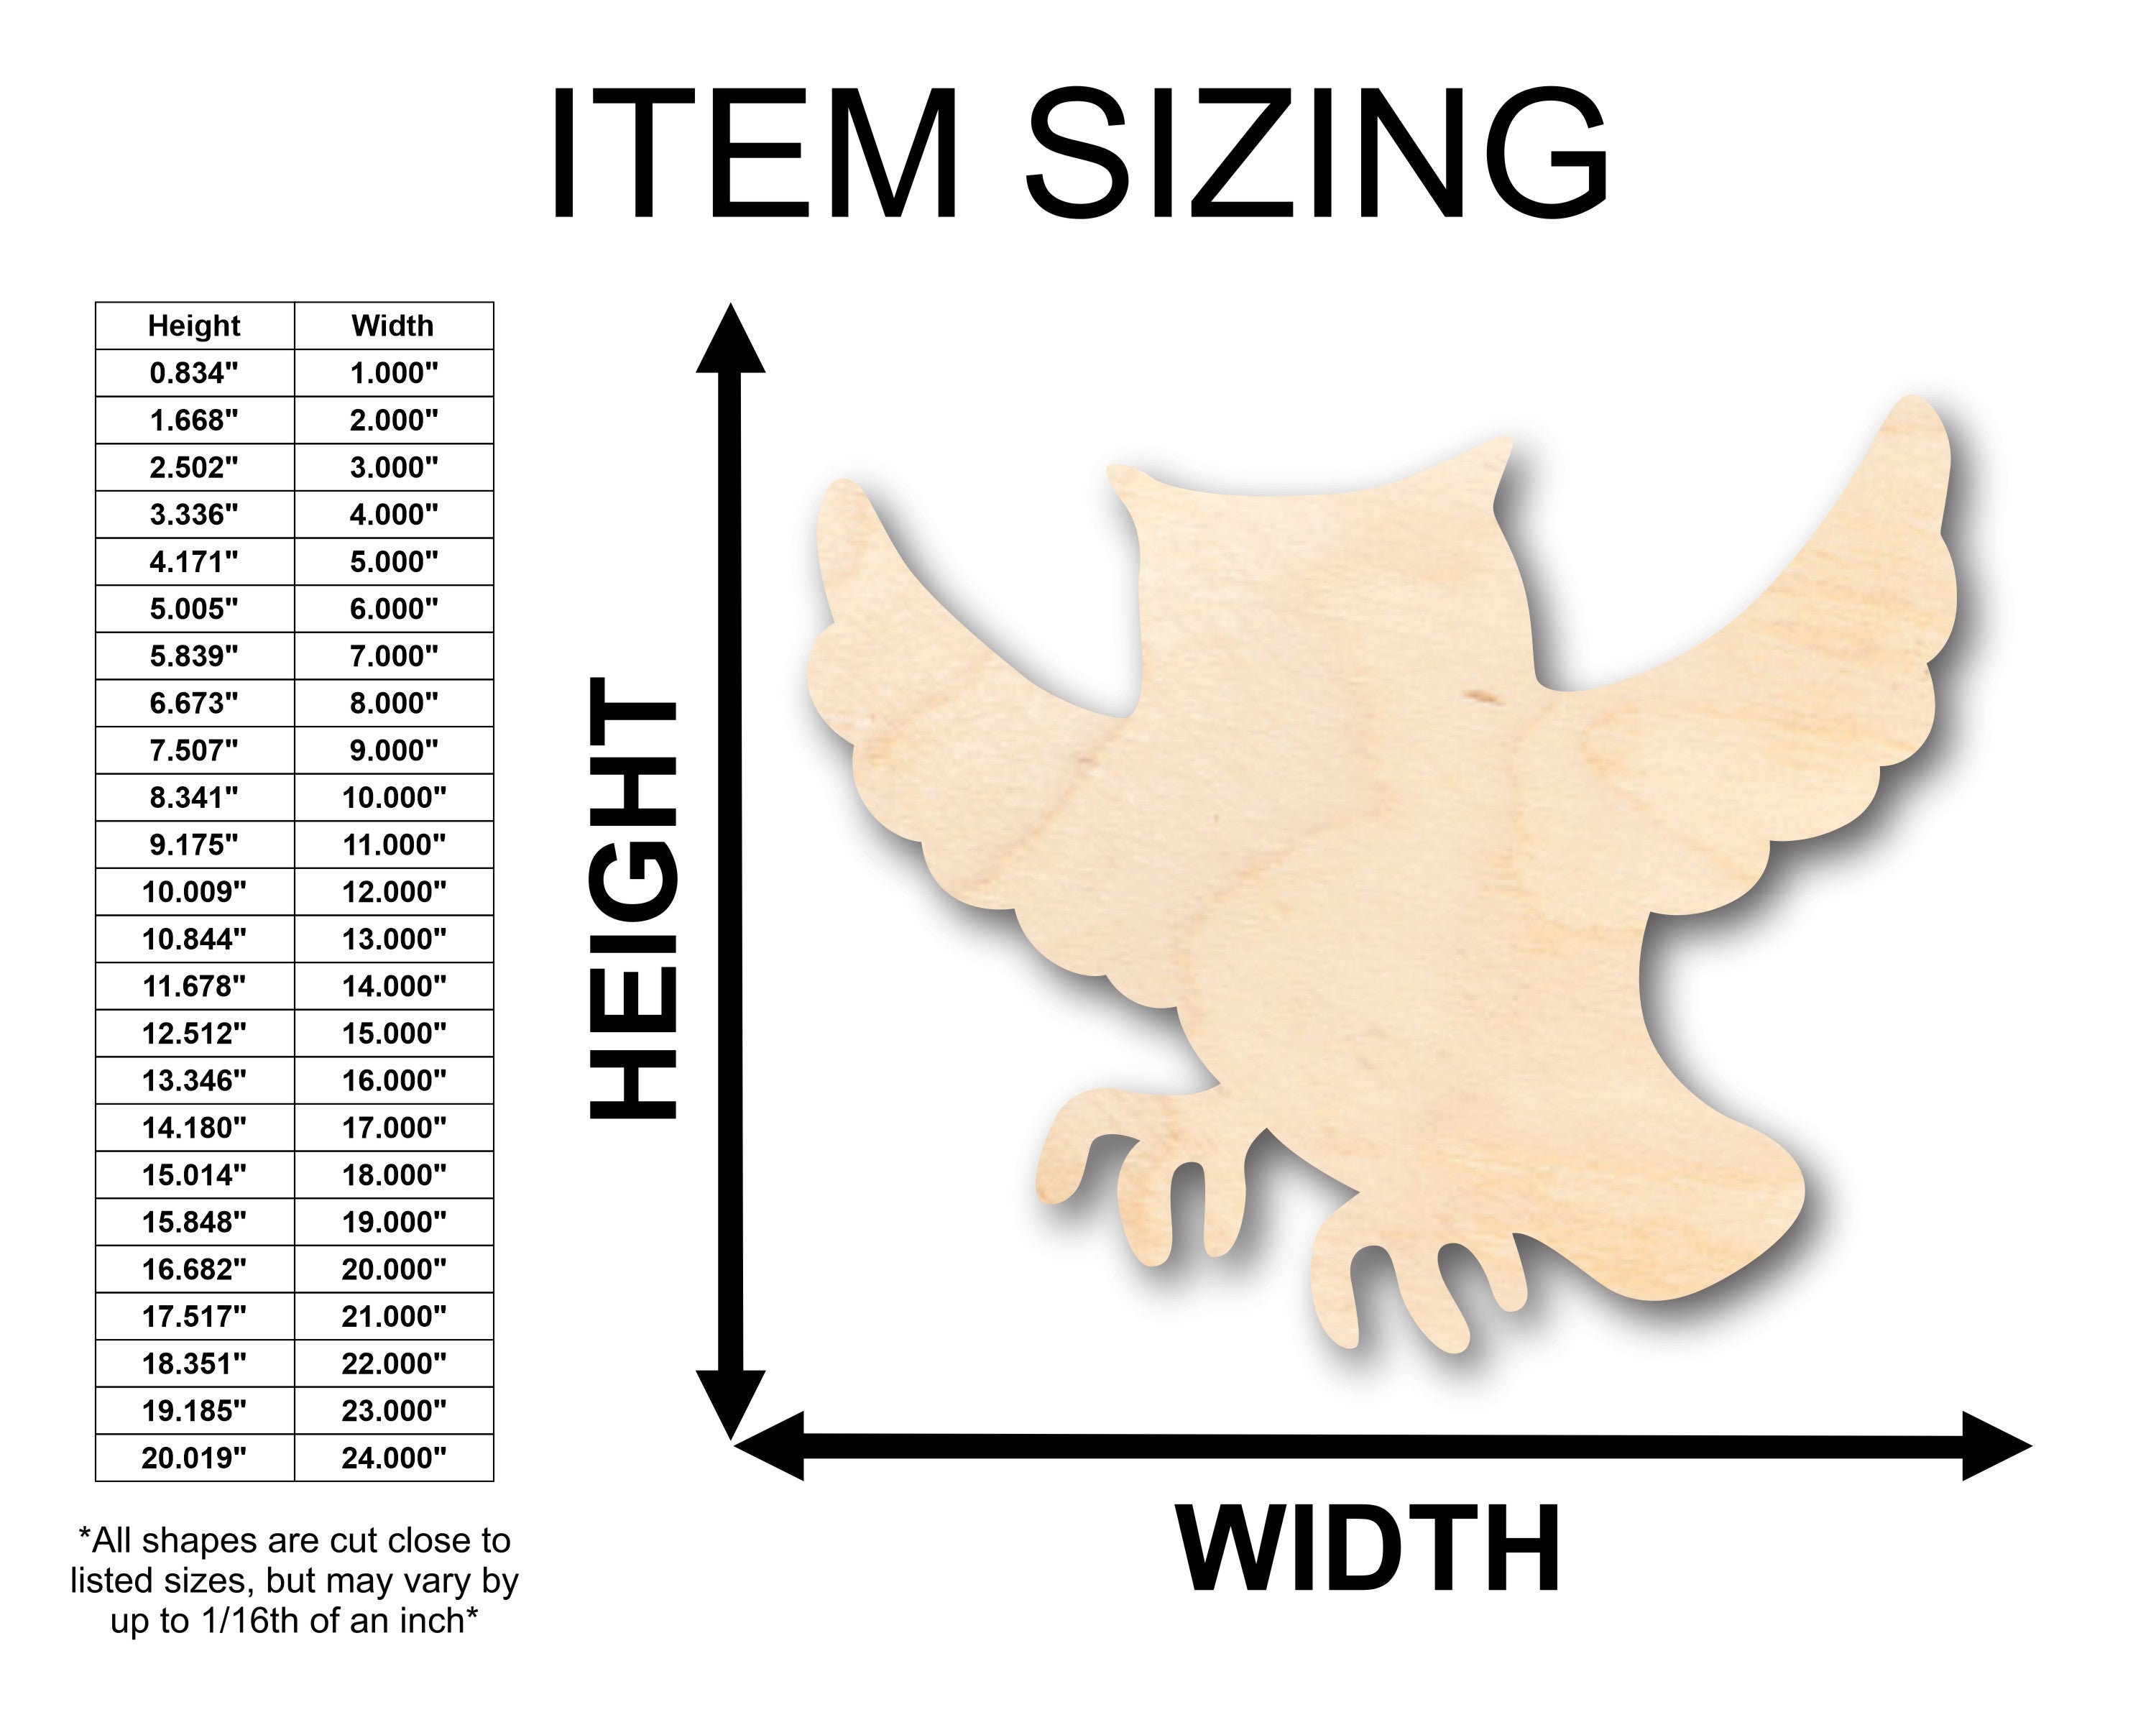 Unfinished Wood Flying Owl Shape - Craft - up to 36